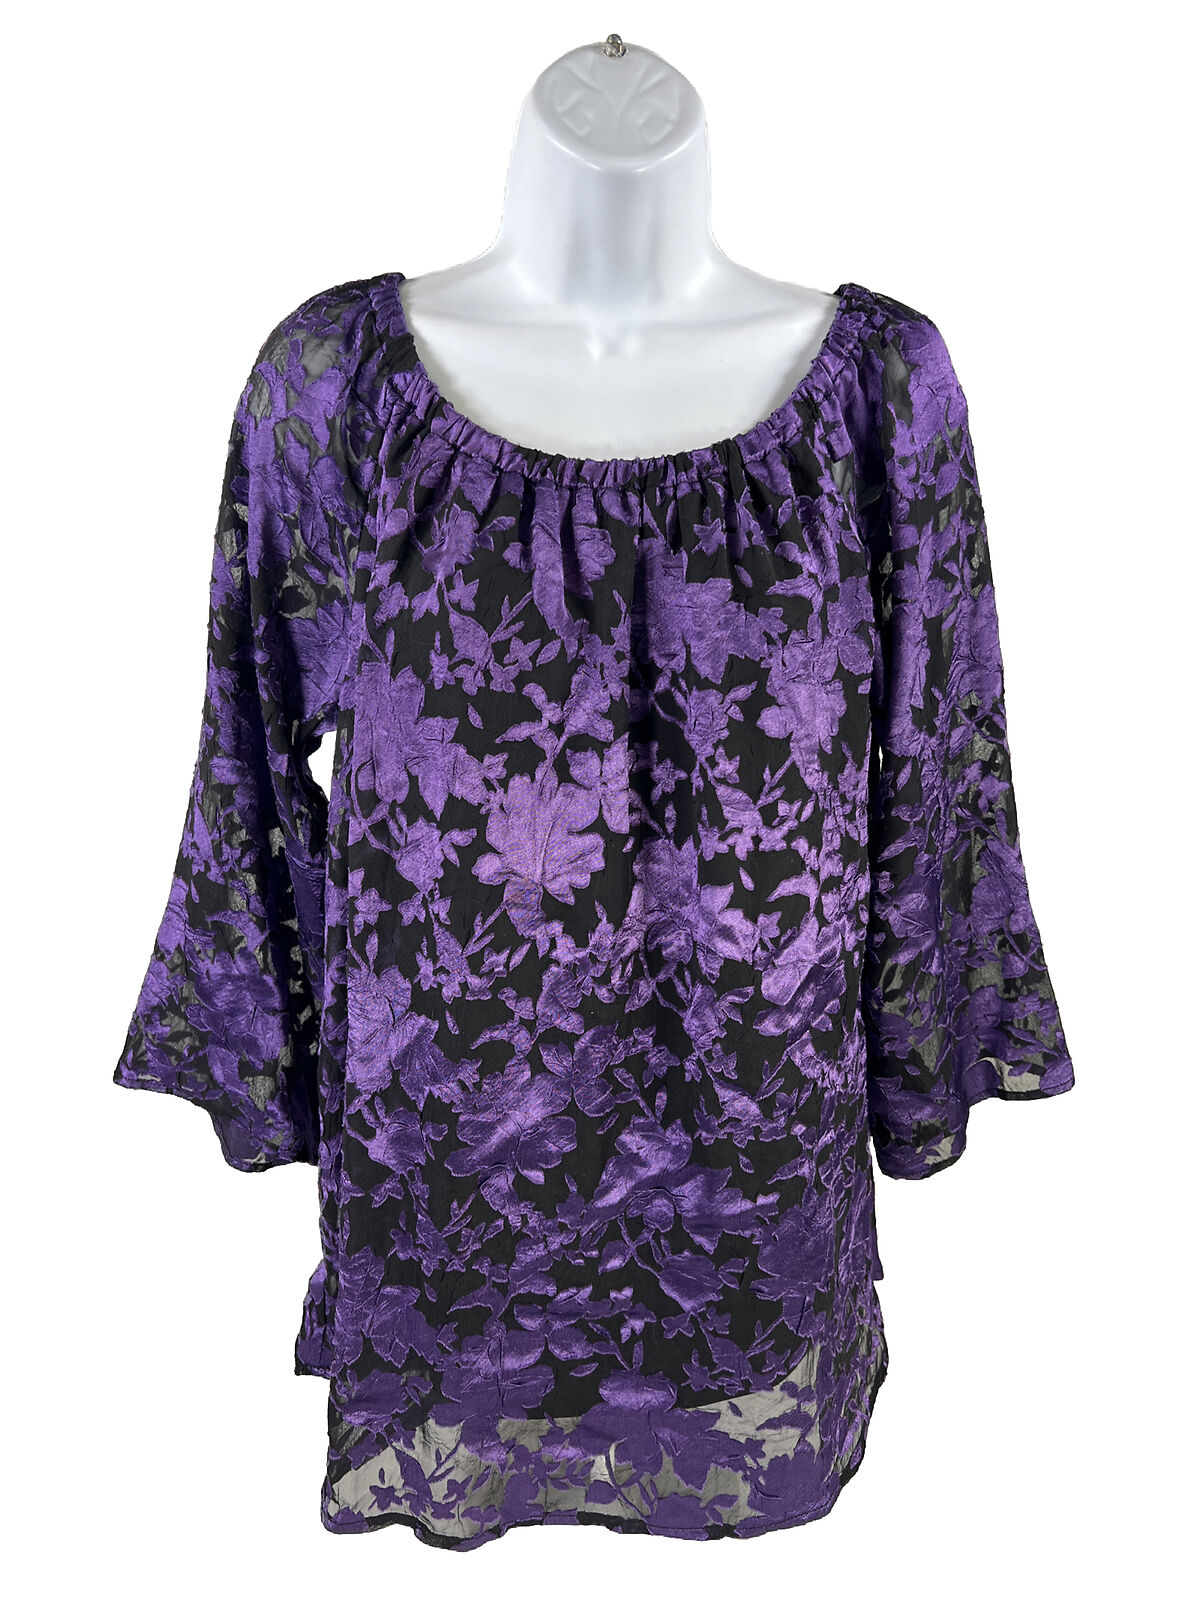 NEW Alfani Women's Purple Shimmer Flowers 3/4 Sleeve Blouse - S